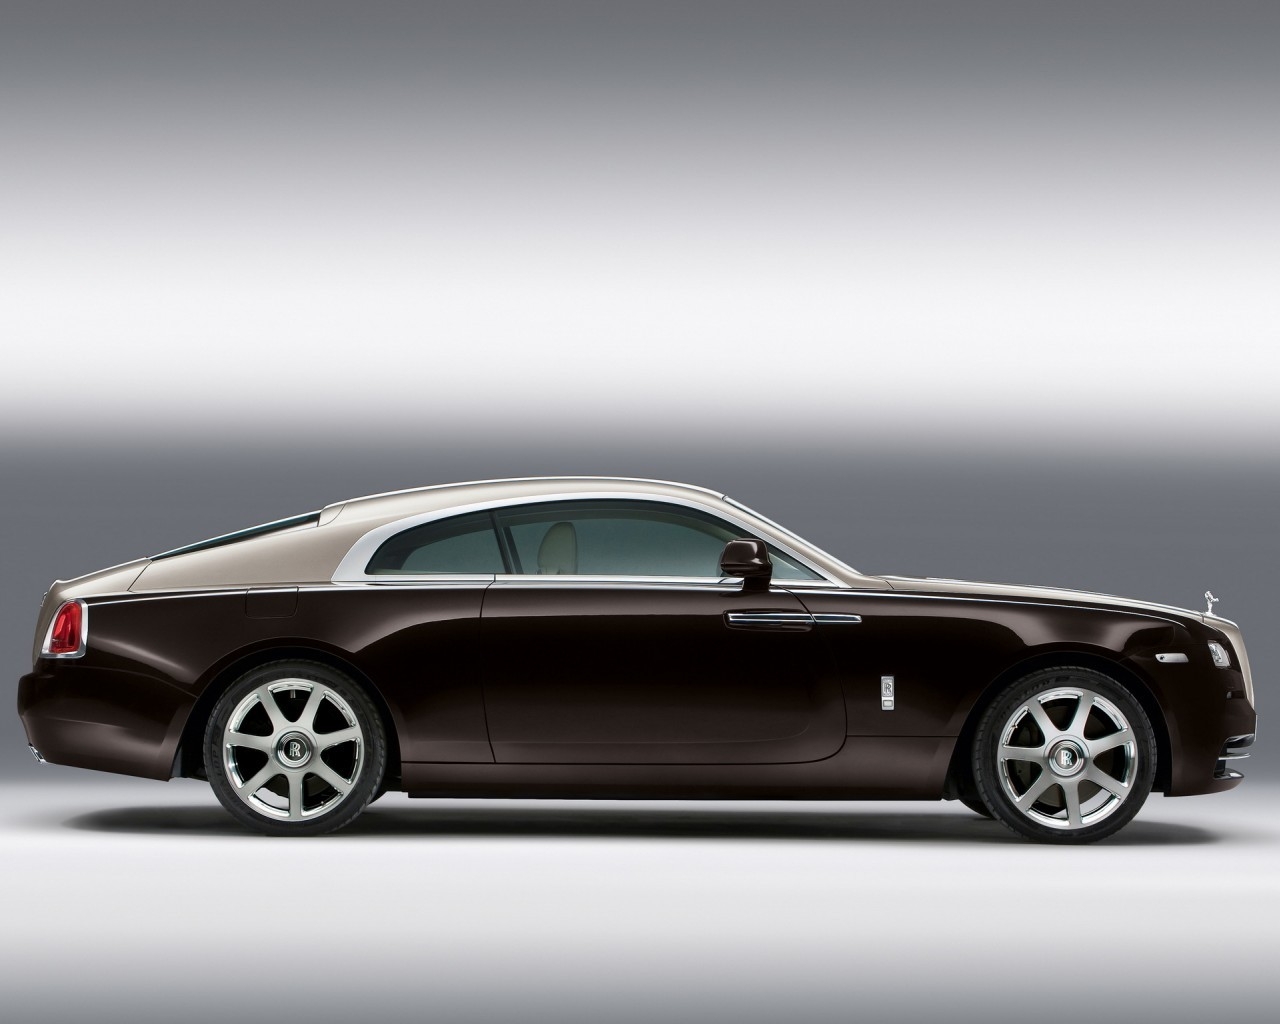 Stunning Rolls Royce Wraith for 1280 x 1024 resolution